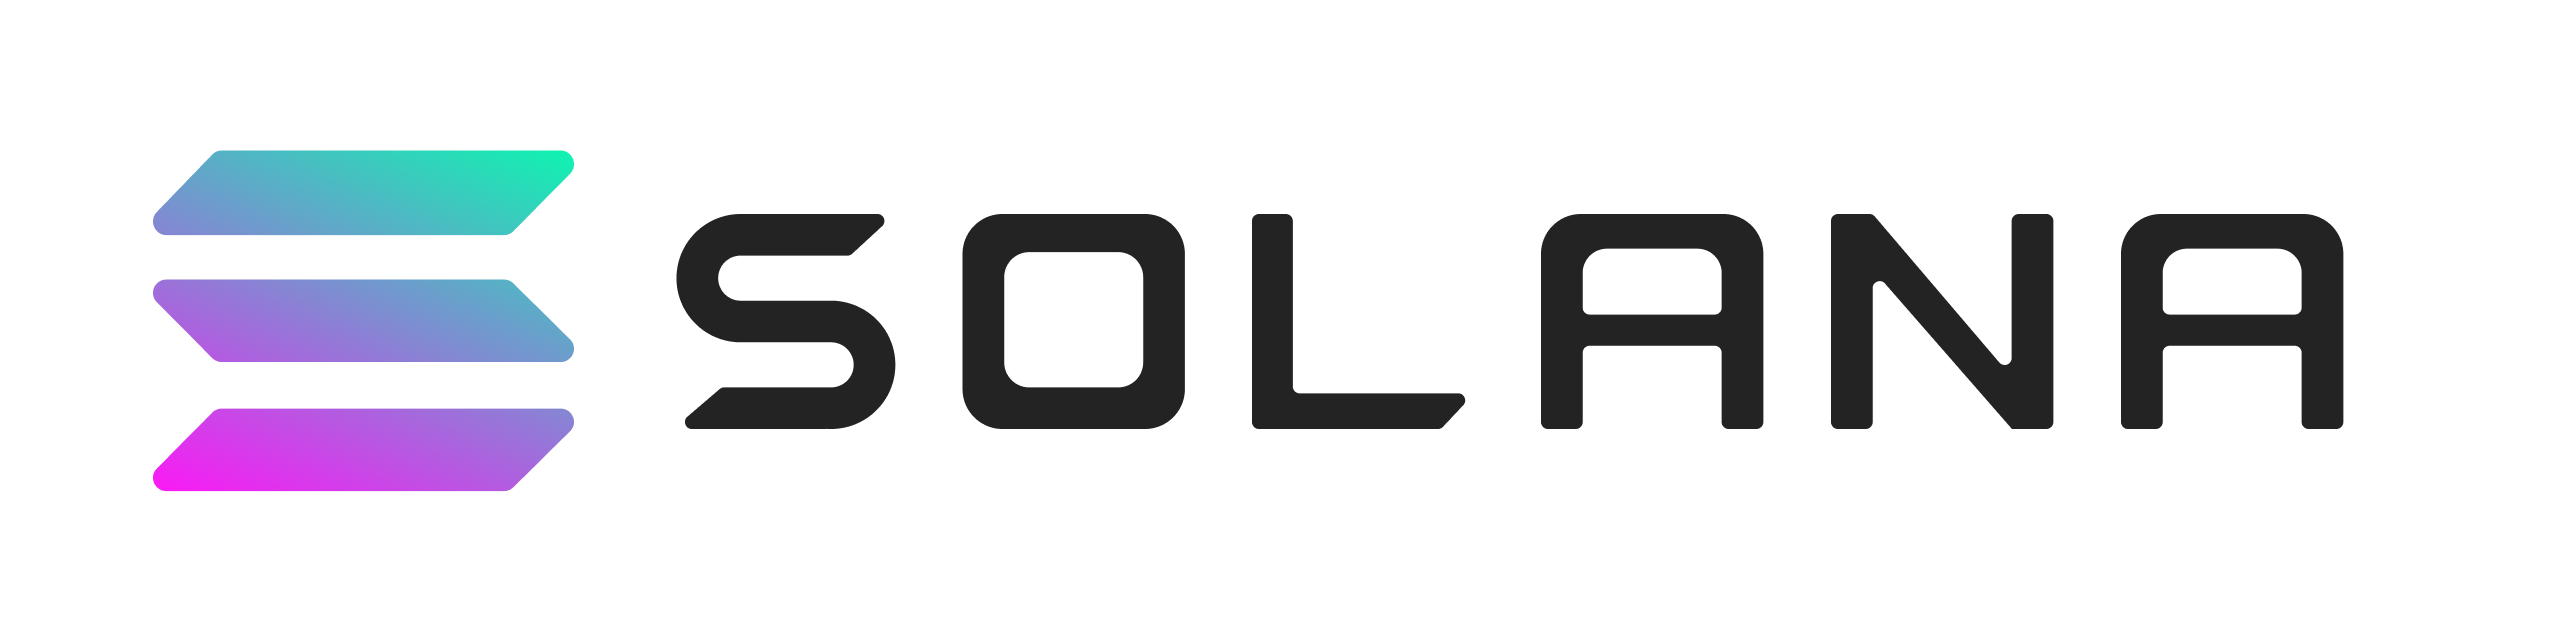 Solana Labs. Солана криптовалюта. Solana Sol logo. Solana (Blockchain platform). Sol space